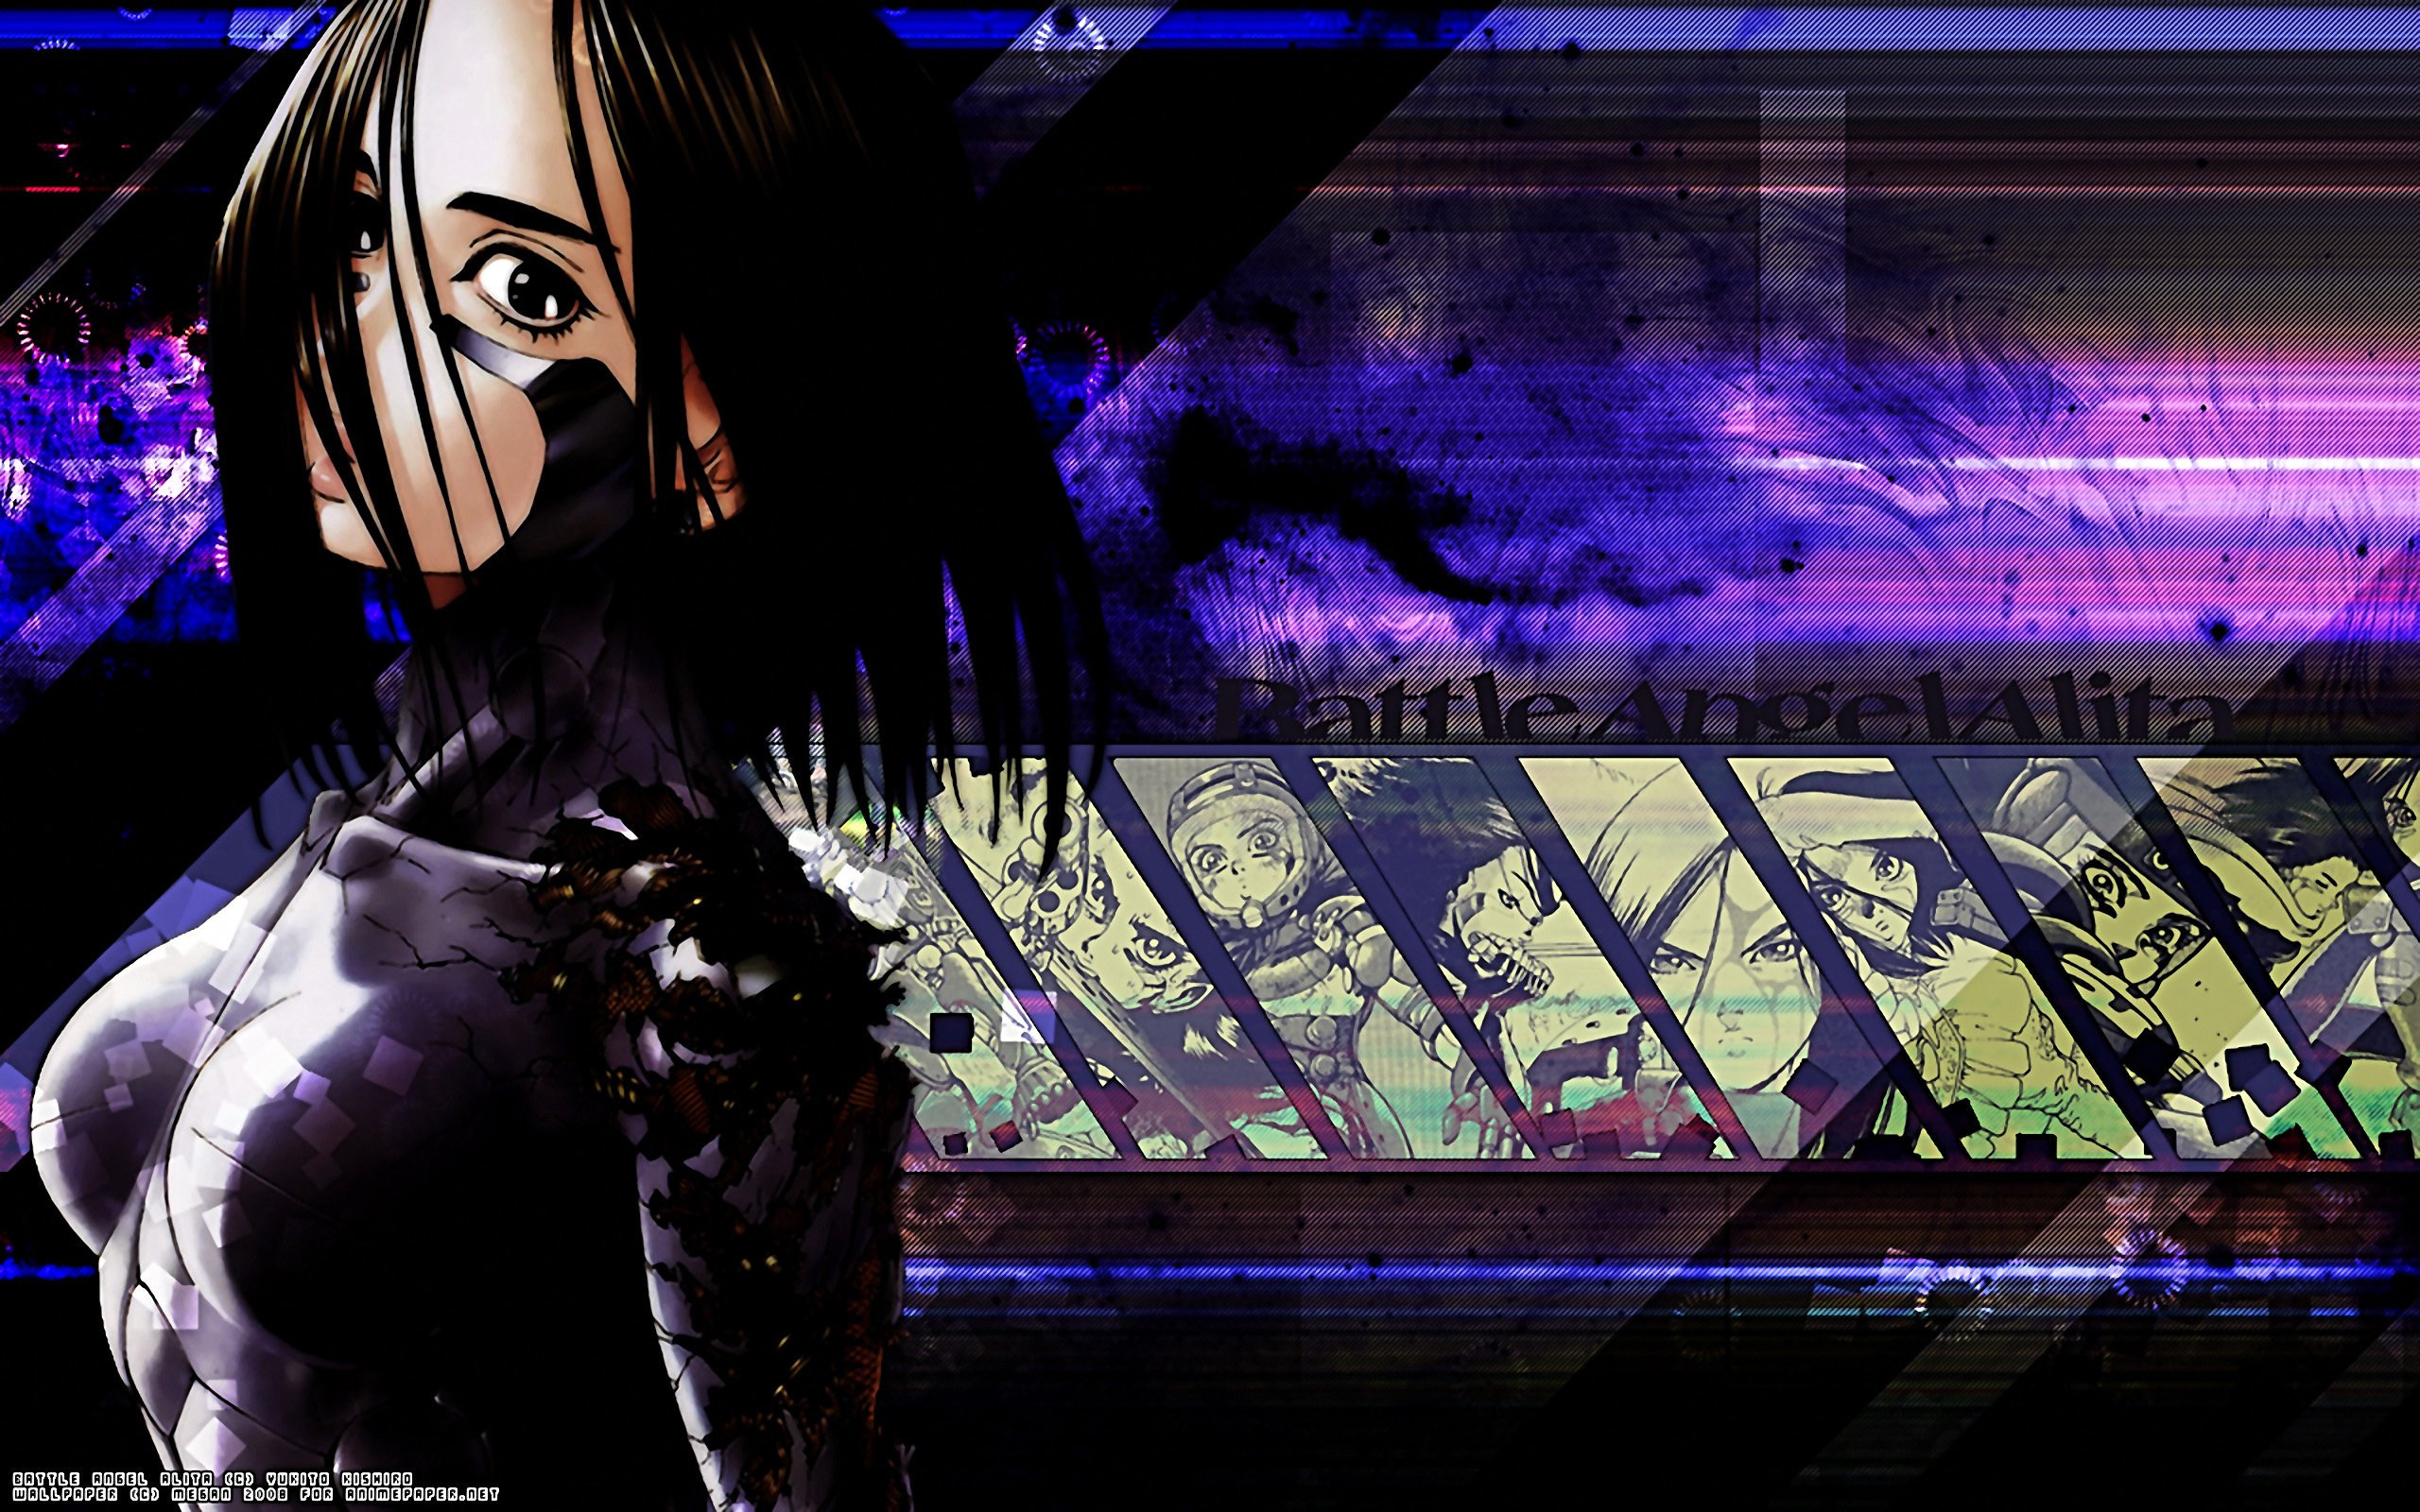 Battle Angel Alita Wallpaper And Background Image